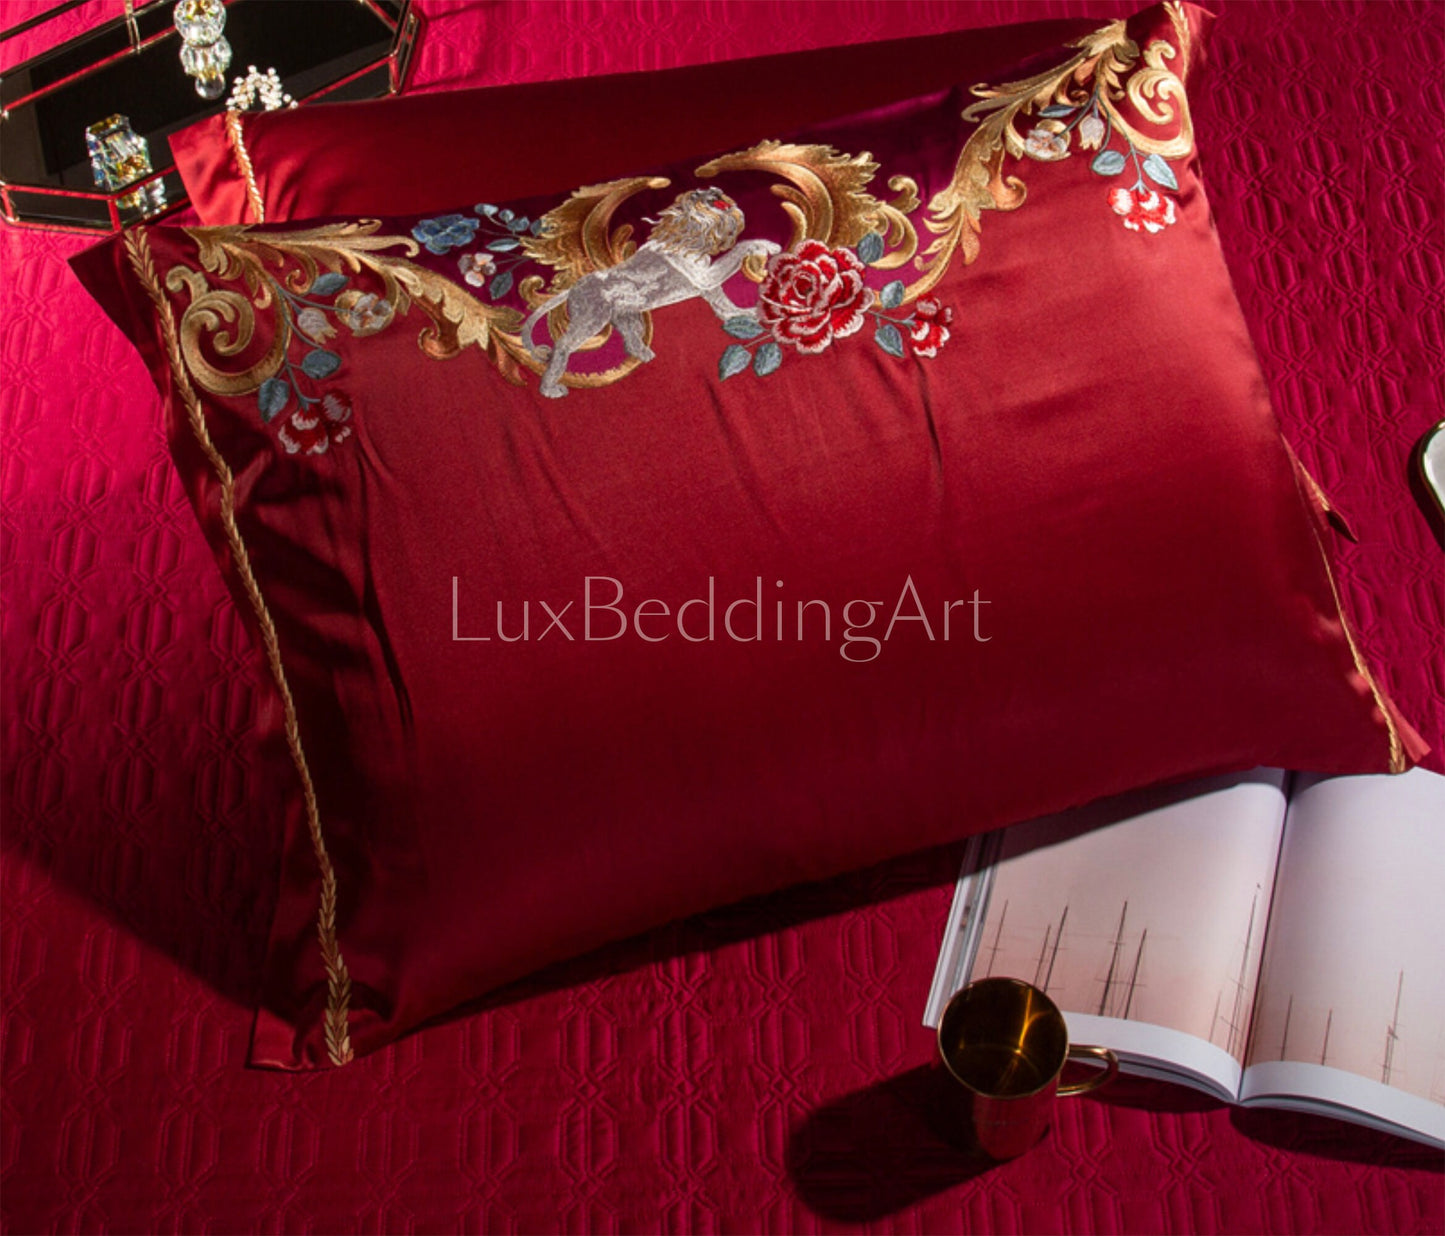 Luxury Premium Large Jacquard with Embroidery Rose Baroque style design Bedding Set  • 4/6/10/12 PCS